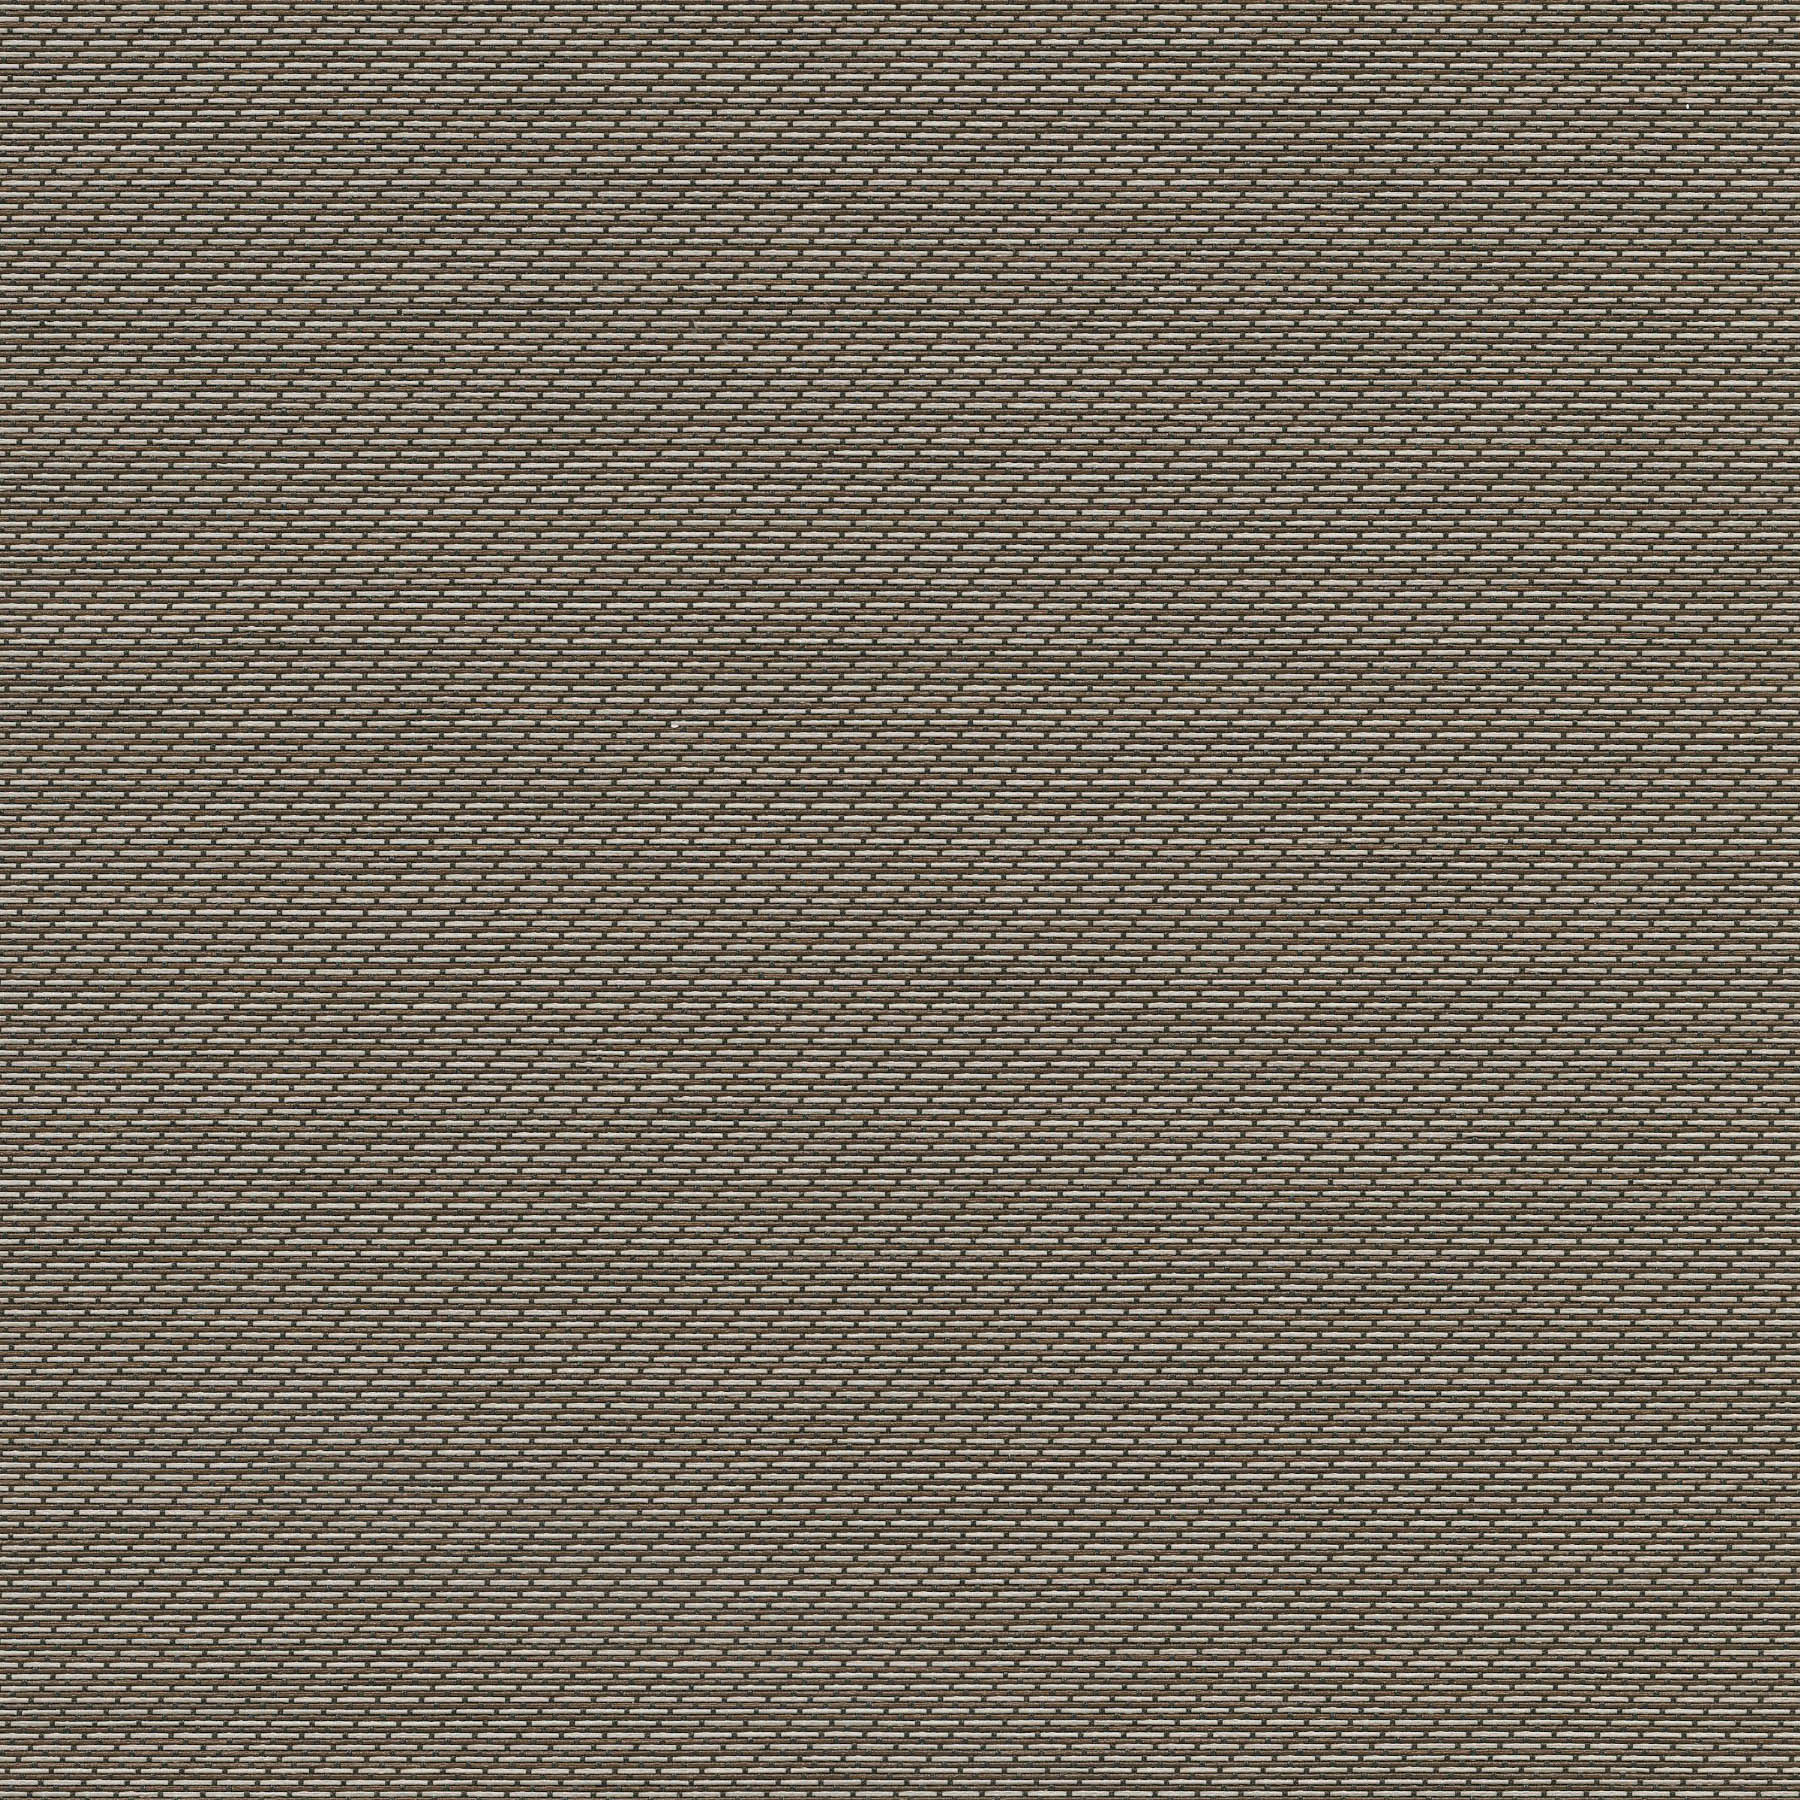 Altex - Fabric - SHEERWEAVE 2701 - Brown/Charcoal - 1354